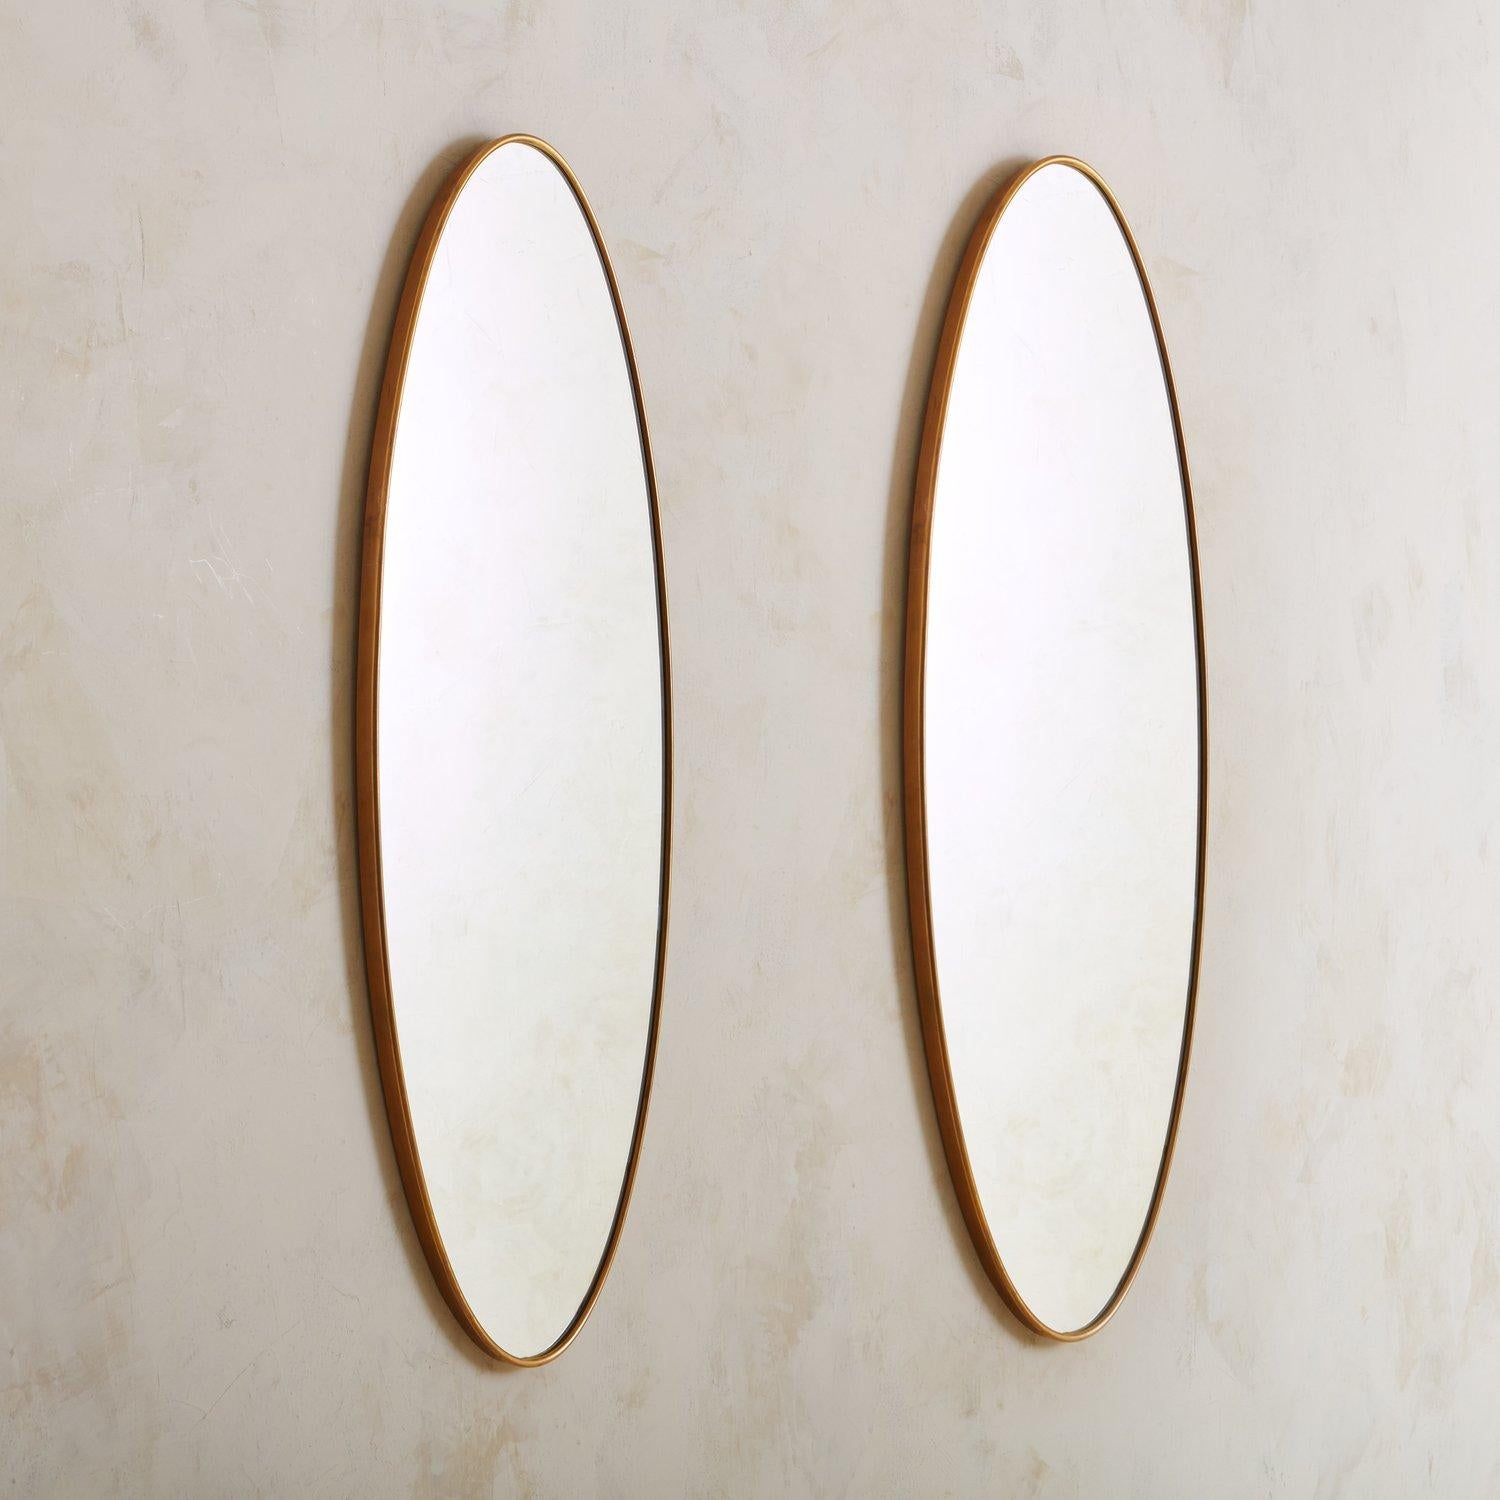 egg shape mirror